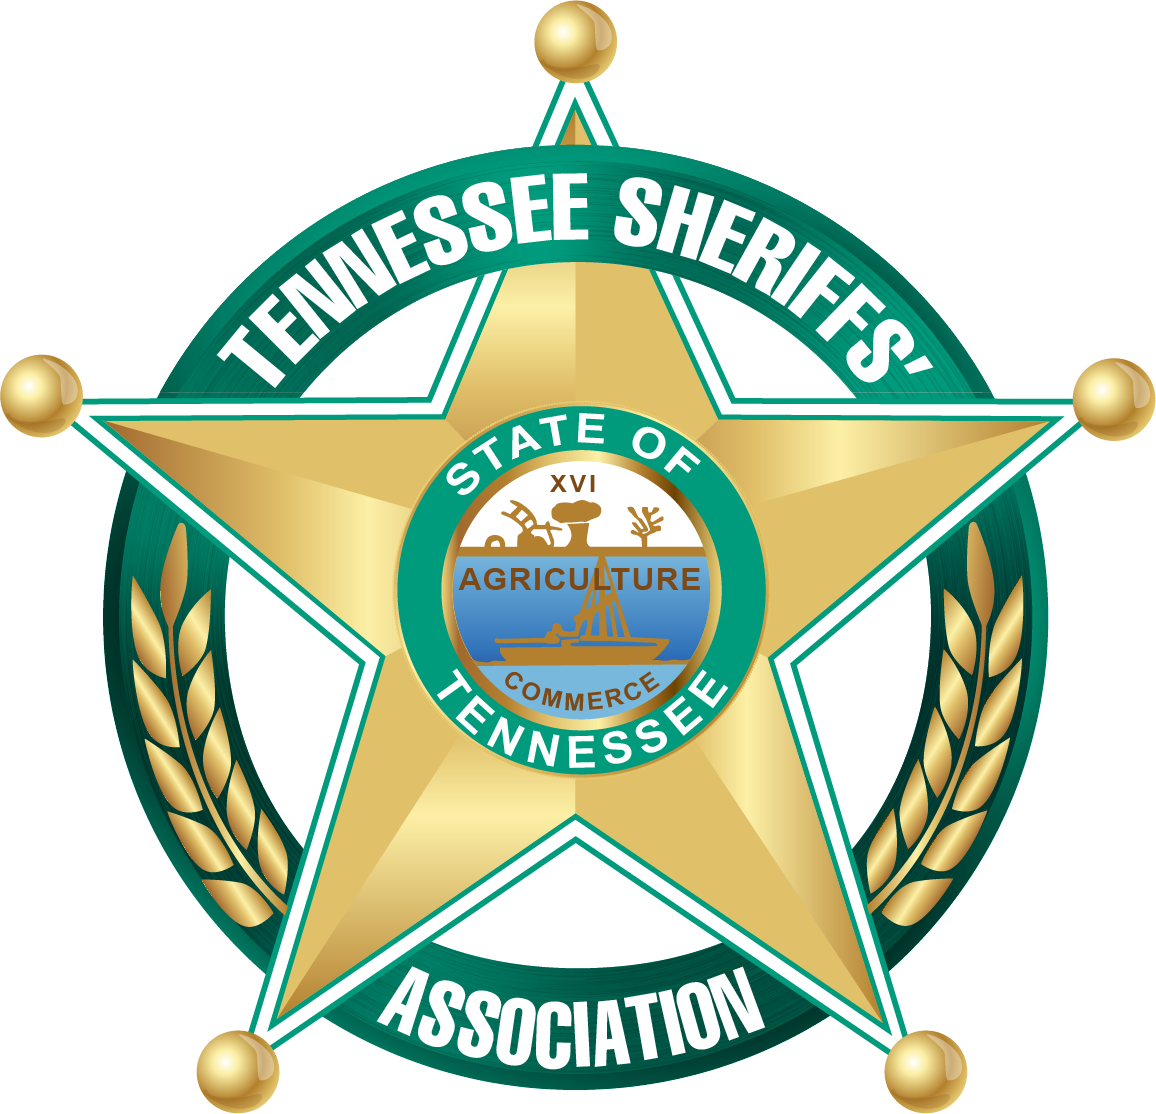 Sheriff's Office Employee/ Spouse/ Retiree Membership